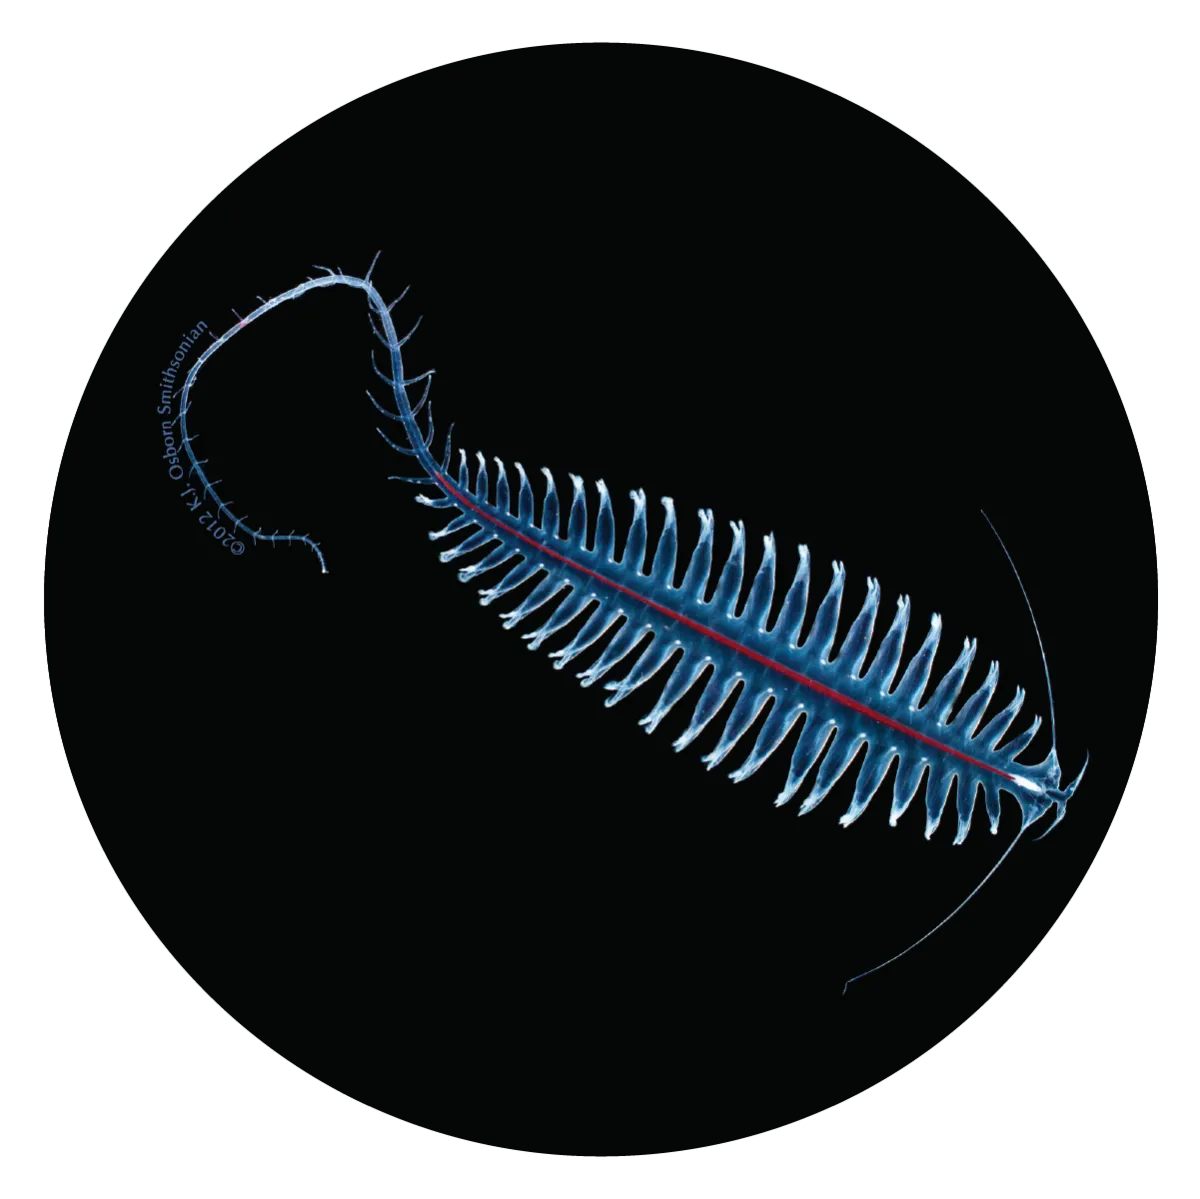 Tomopteridae or gossamer worm